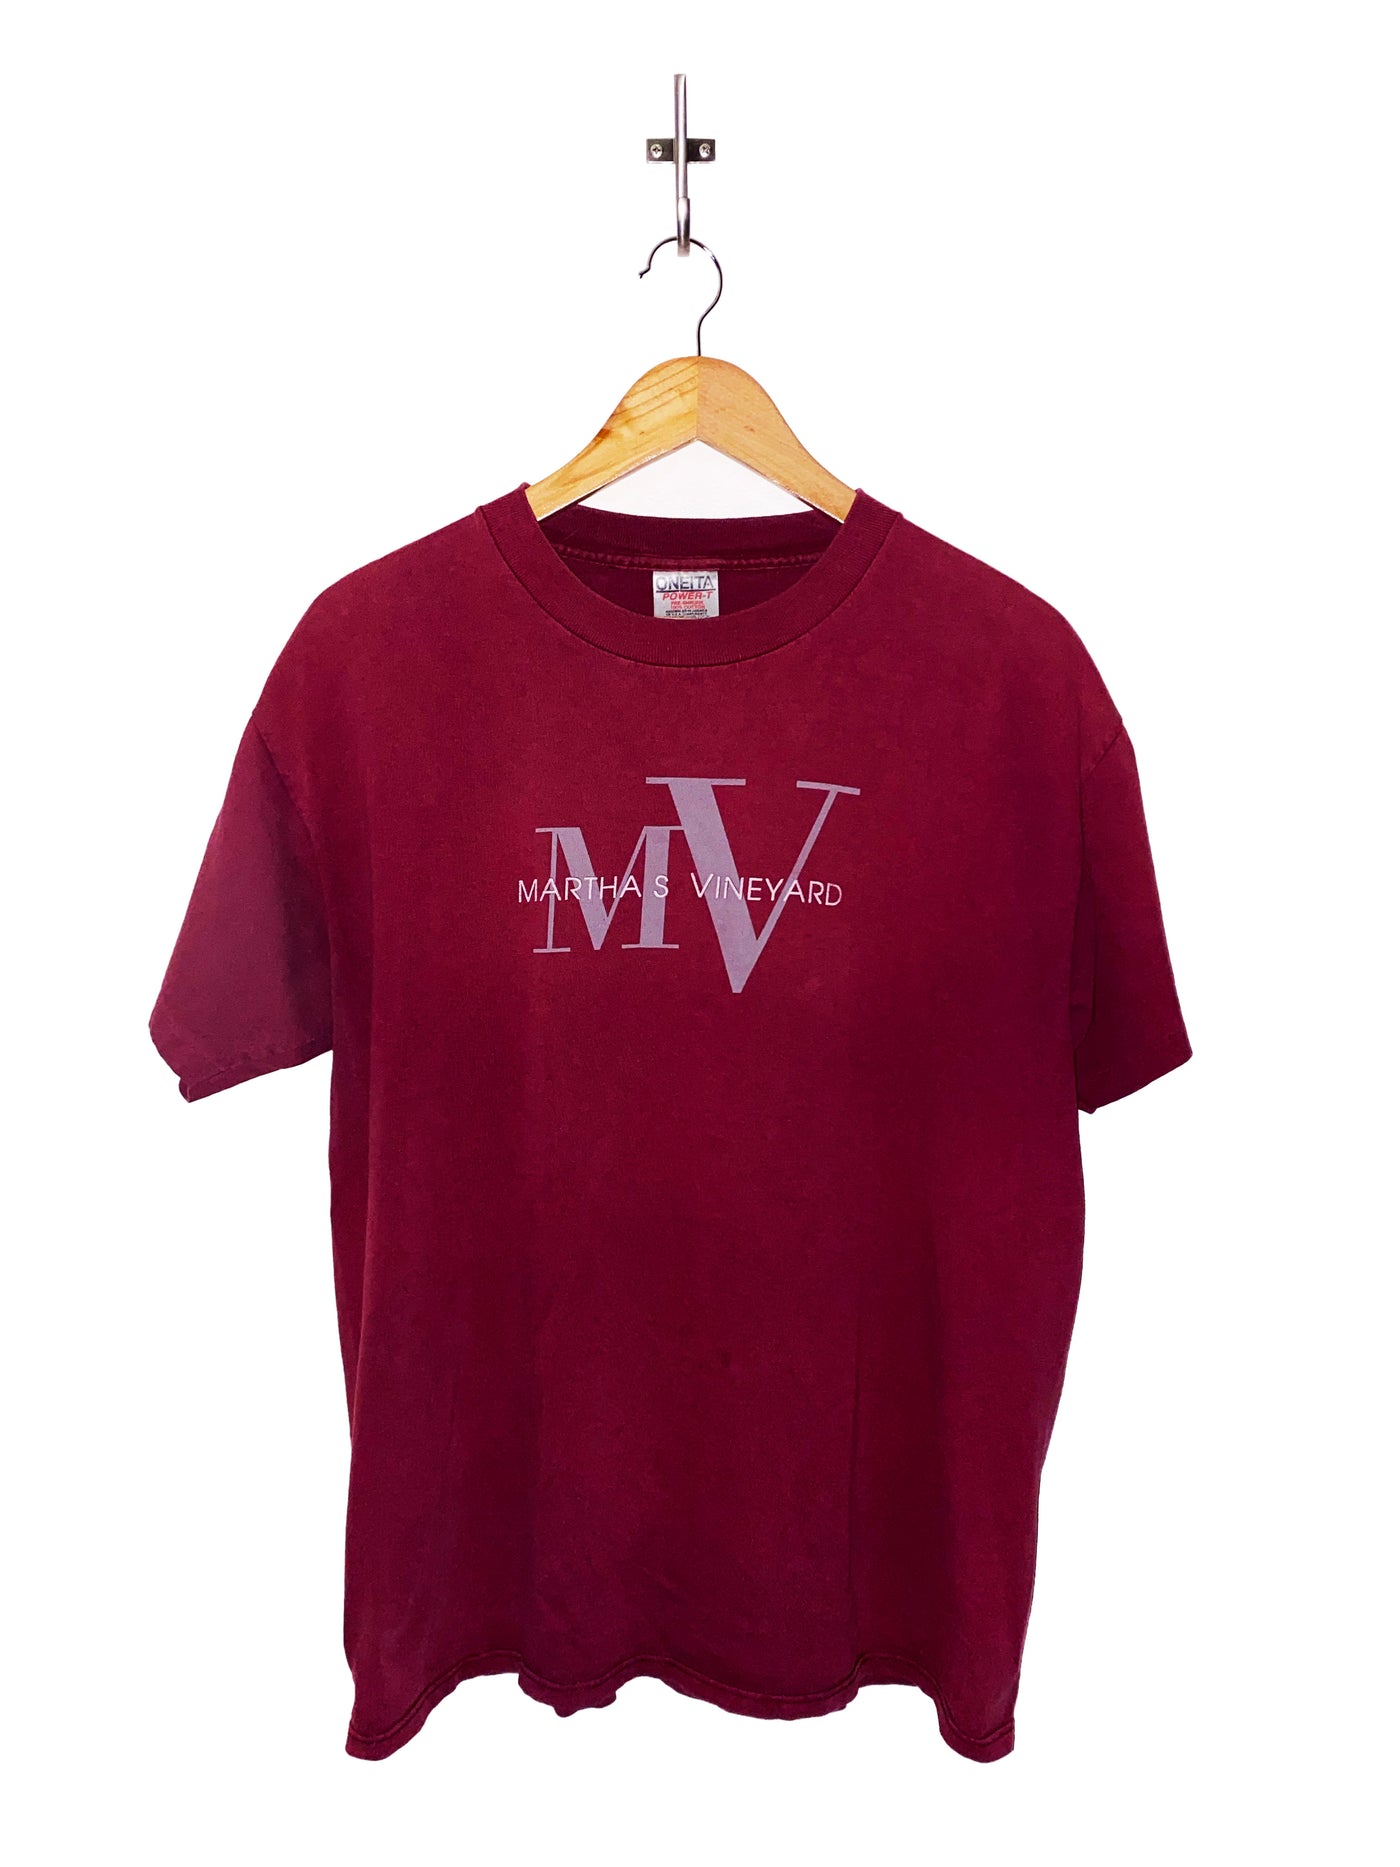 Vintage Martha’s Vineyard T-Shirt